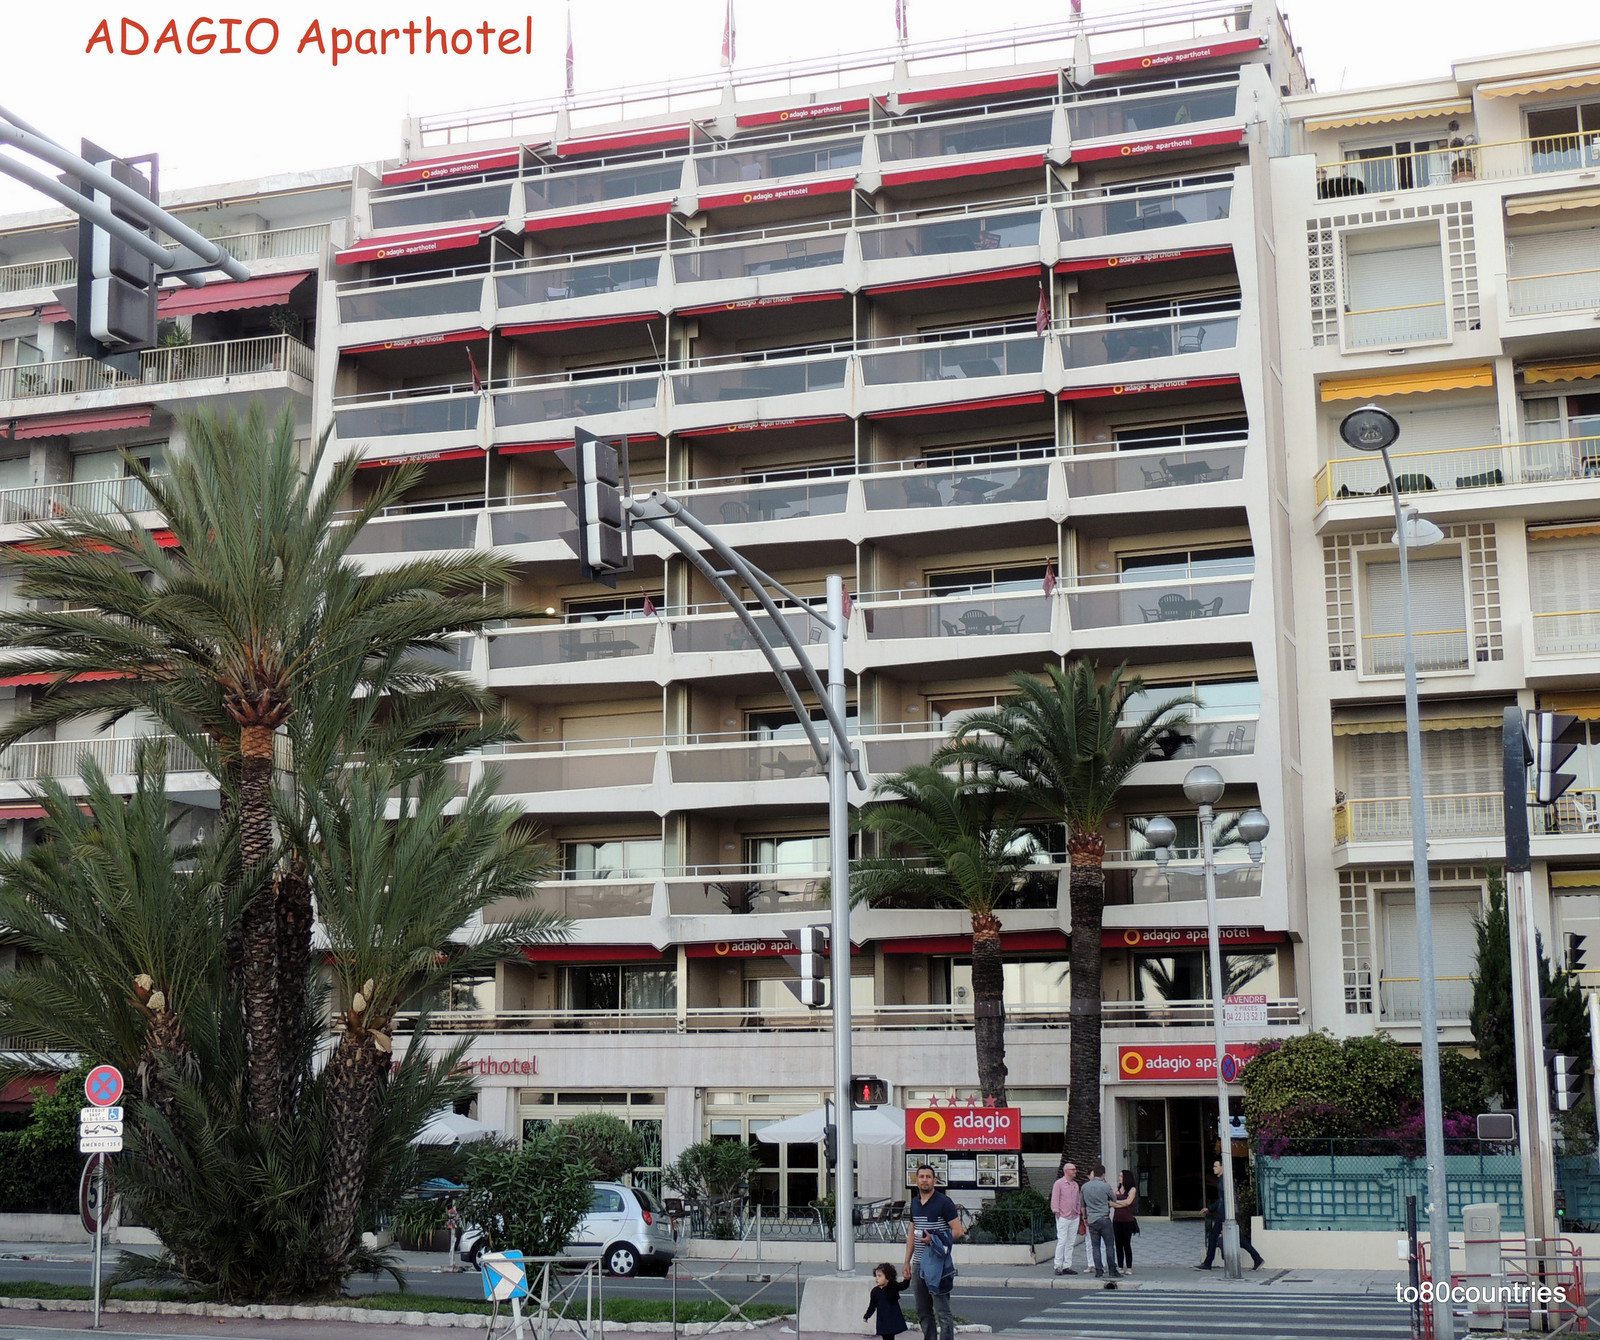 Adagio Aparthotel "Promenade des Anglais" - Nizza - Côte d`Azur